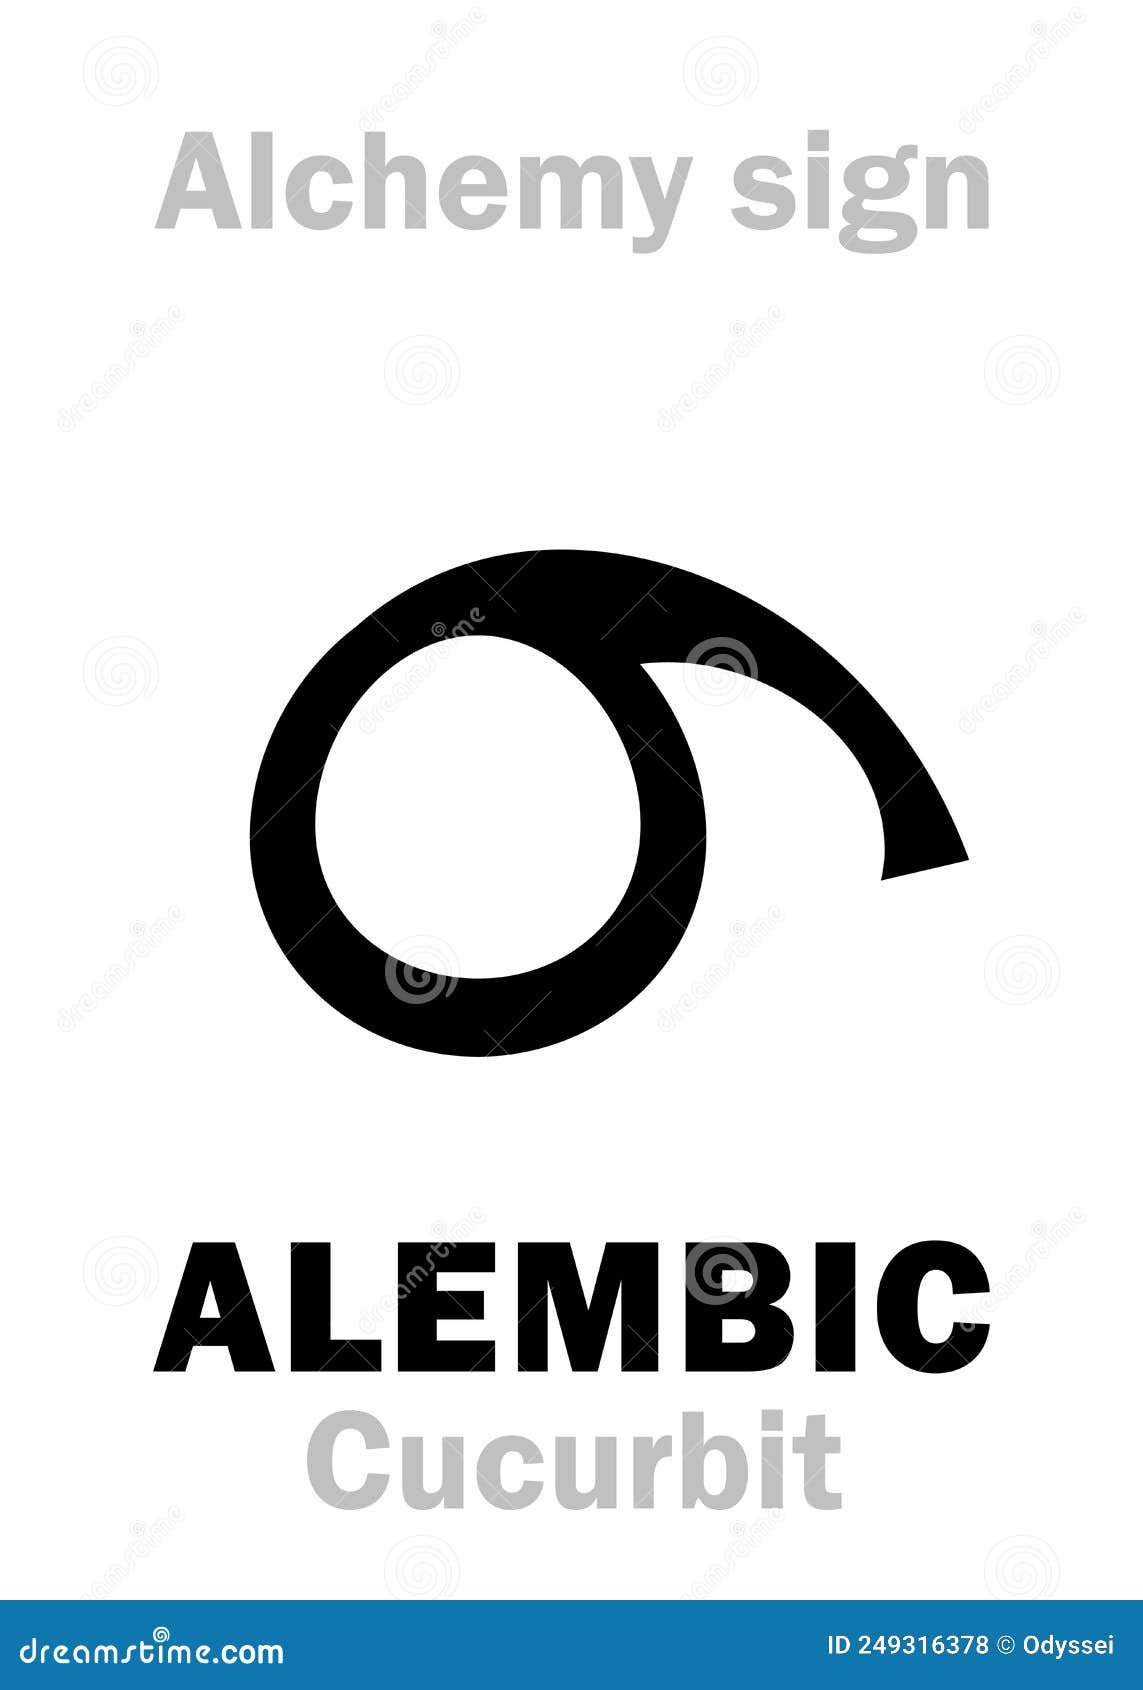 alchemy: alembic (cucurbit)